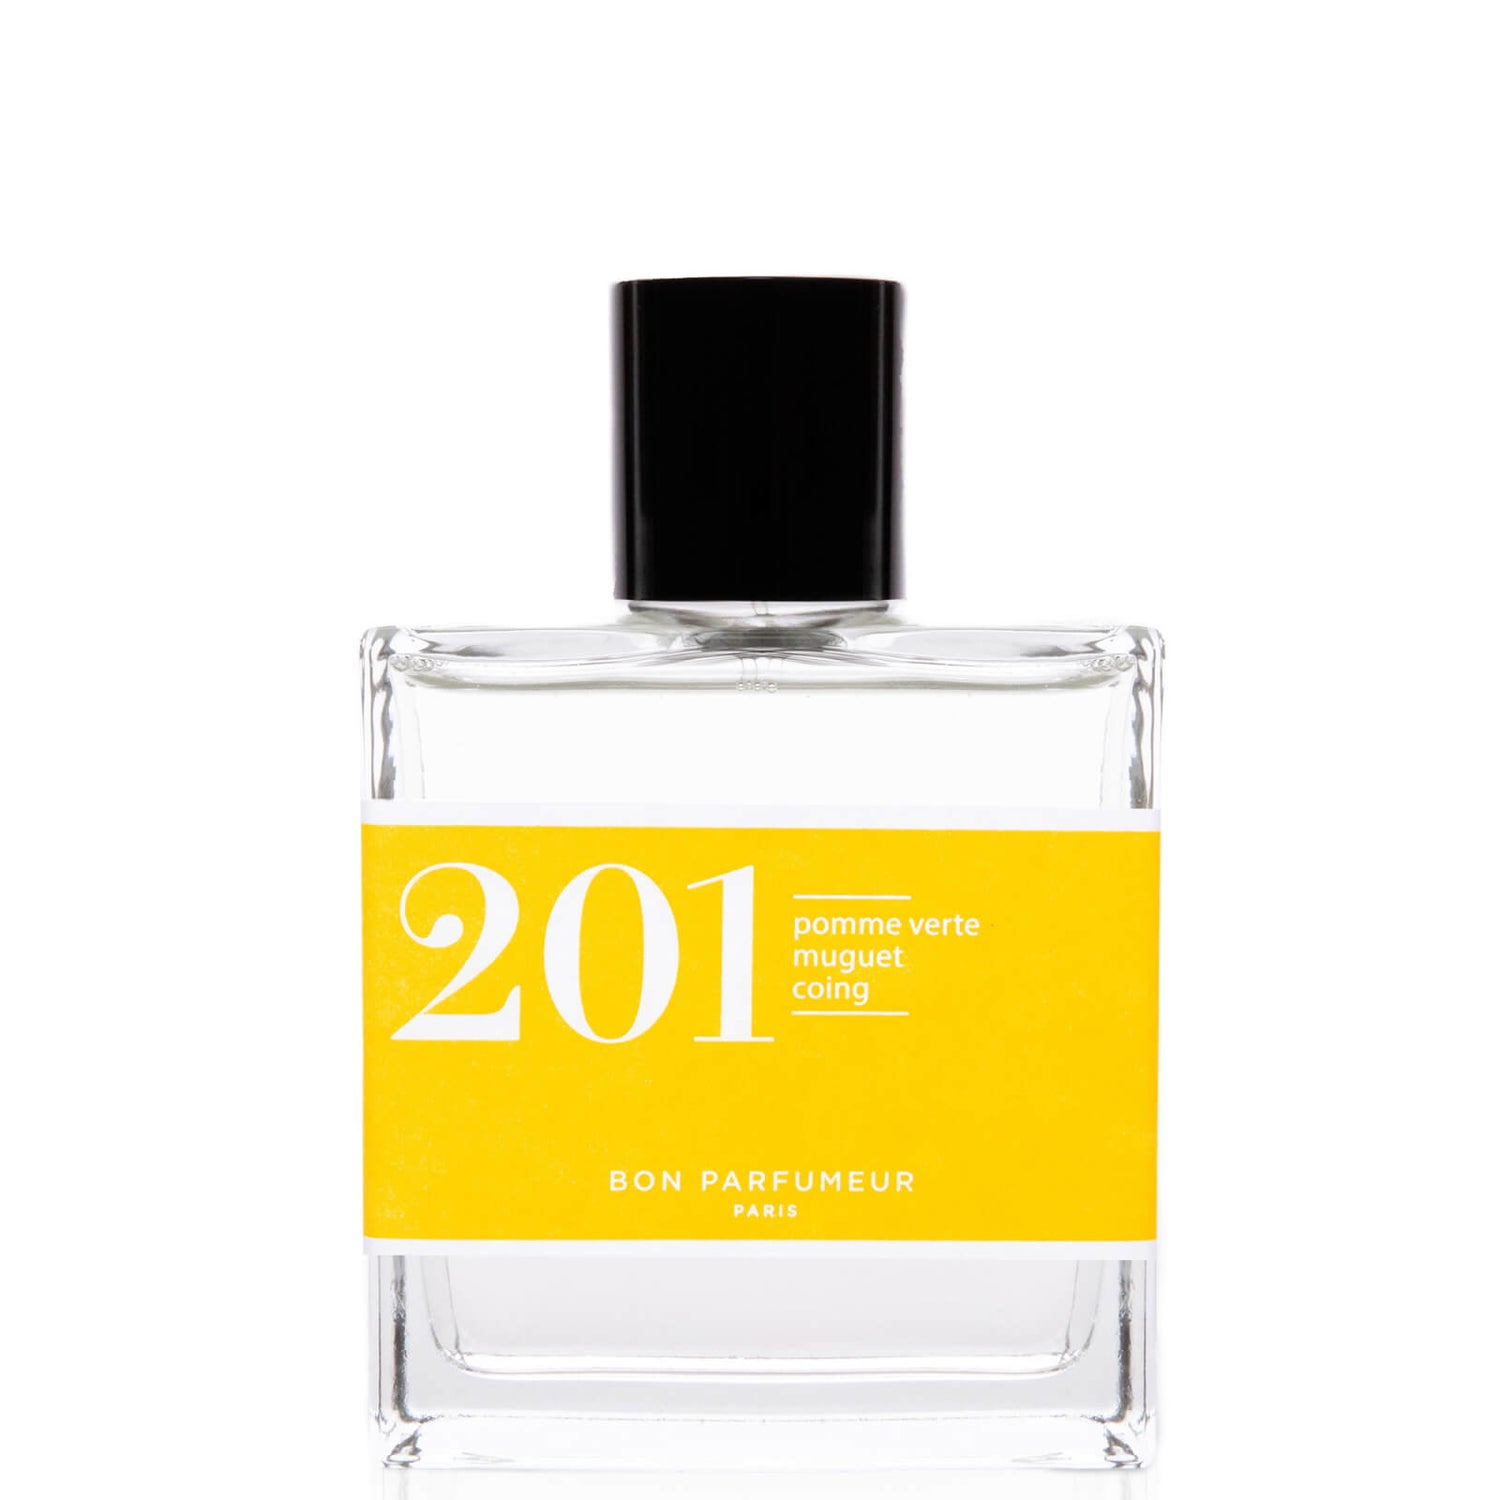 Bon Parfumeur 201 Eau de Parfum Lirio de los Valles - 100ml